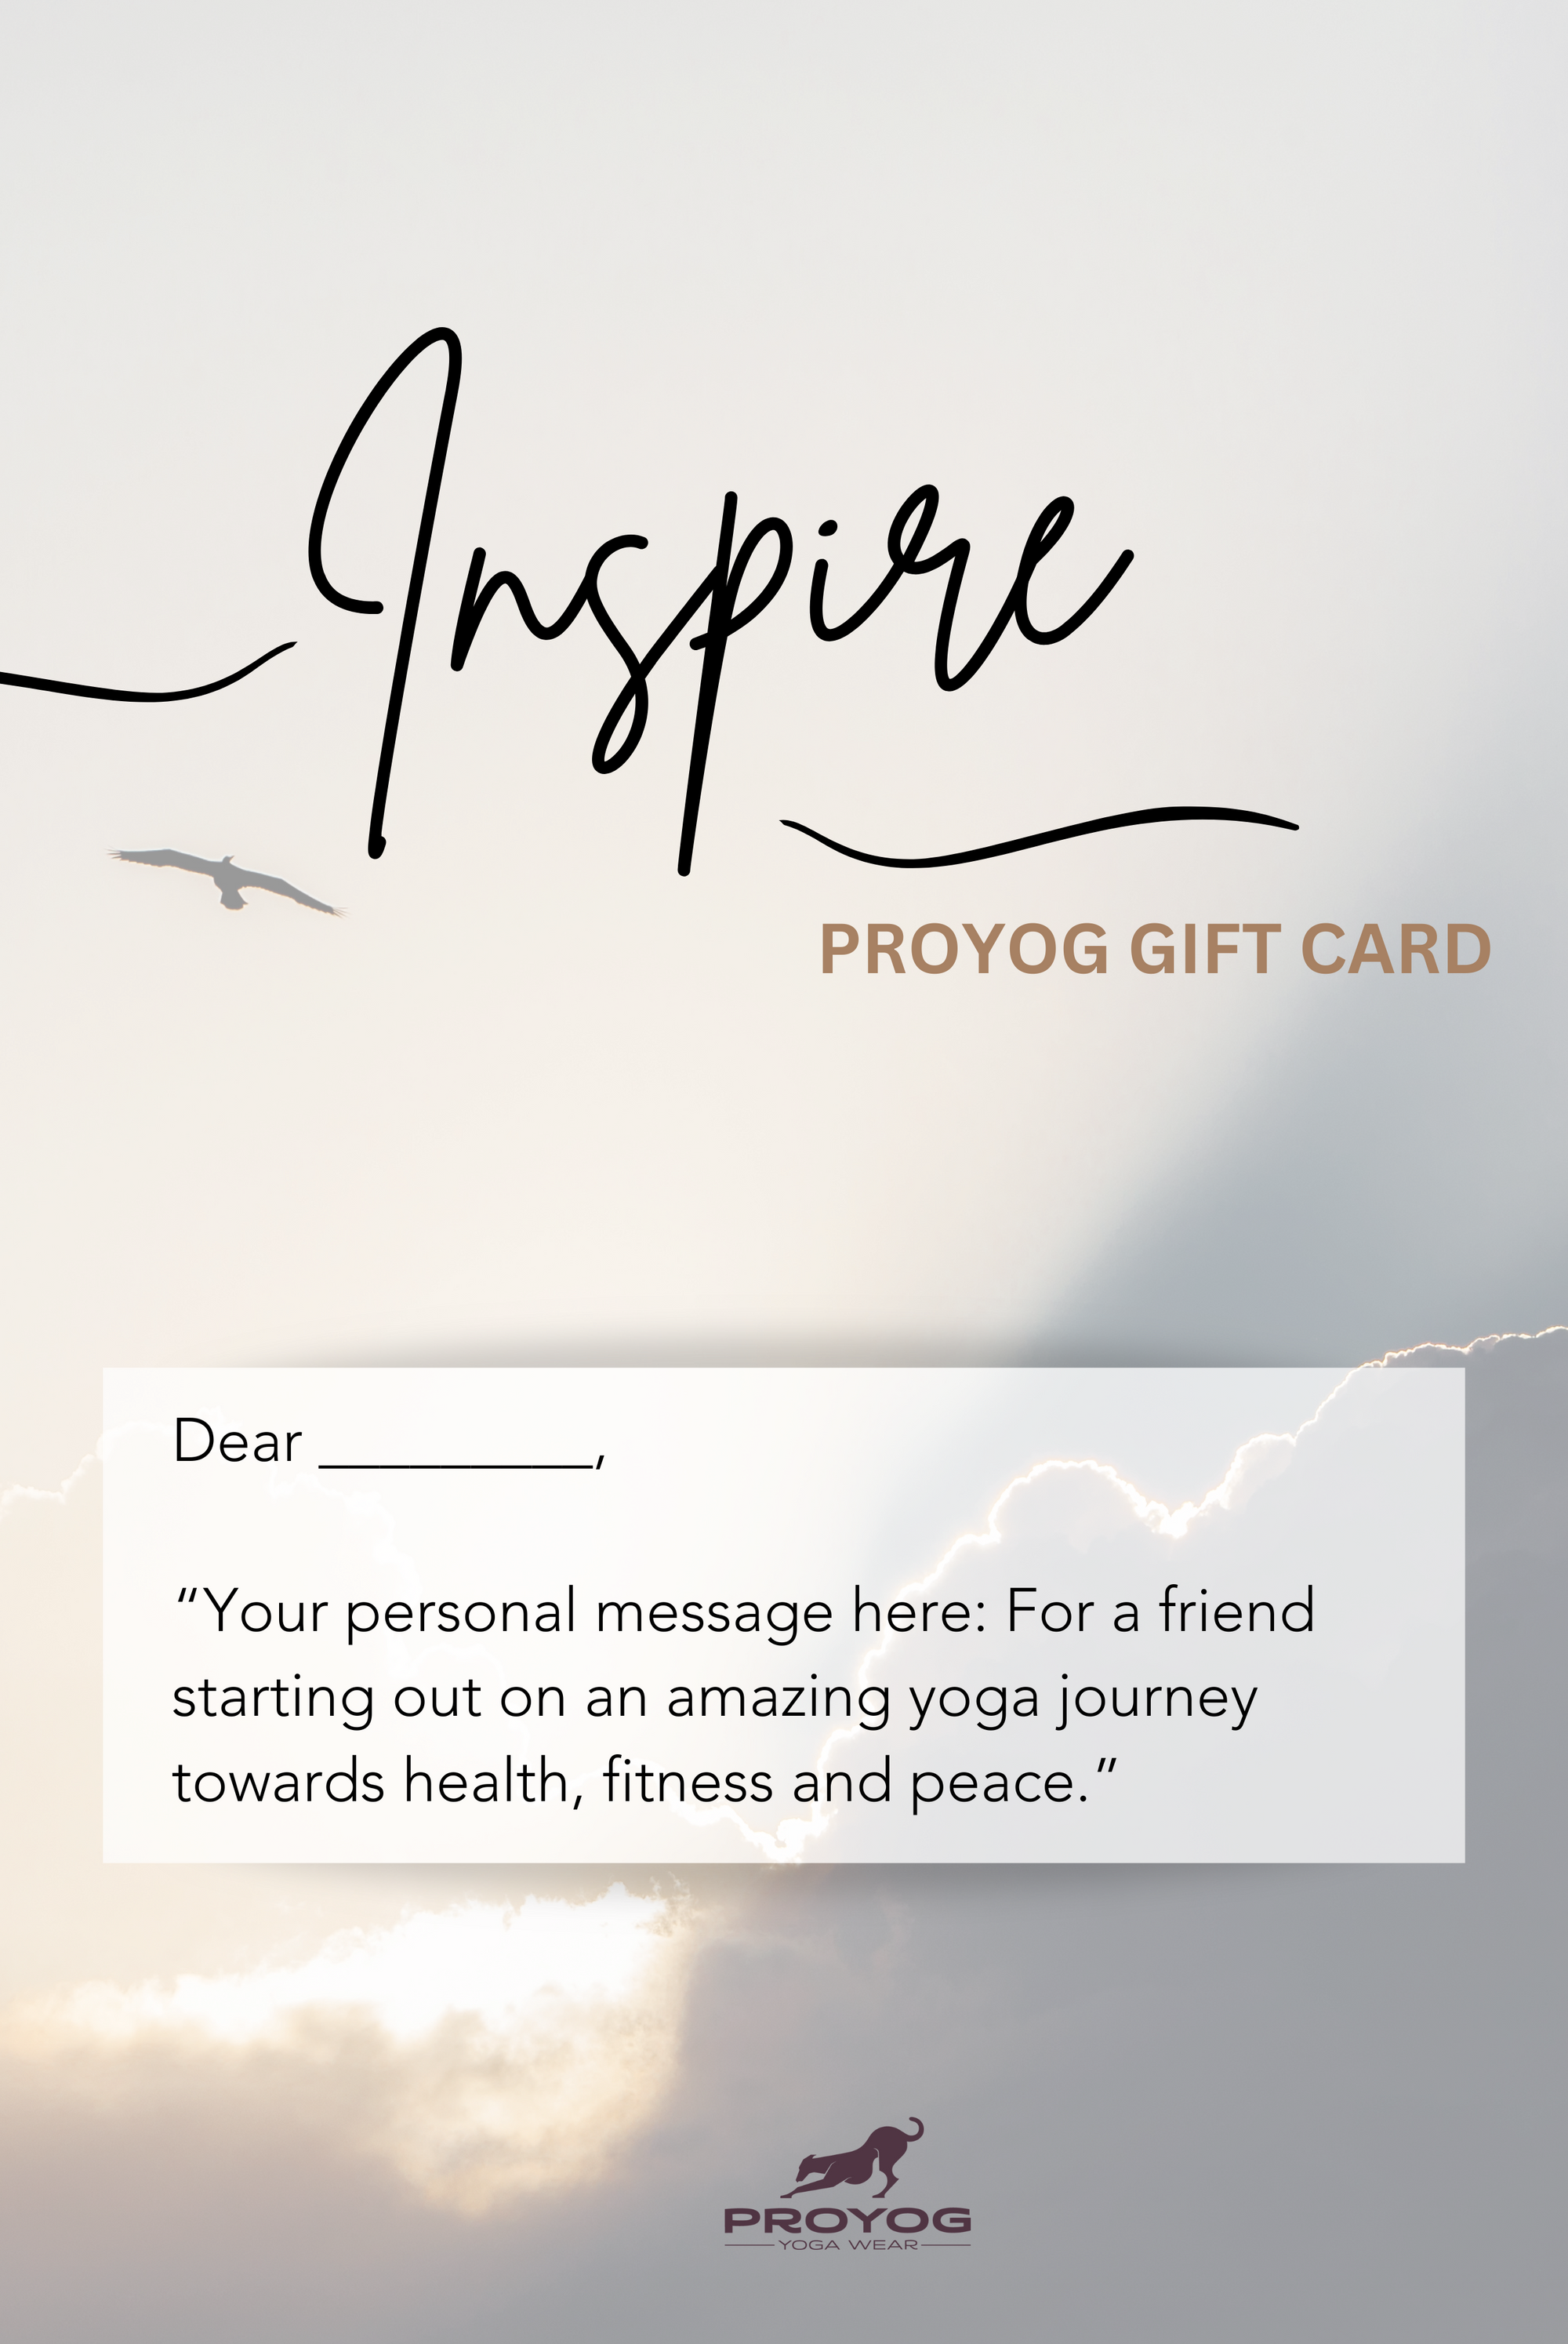 Gift card for a newbie yogi